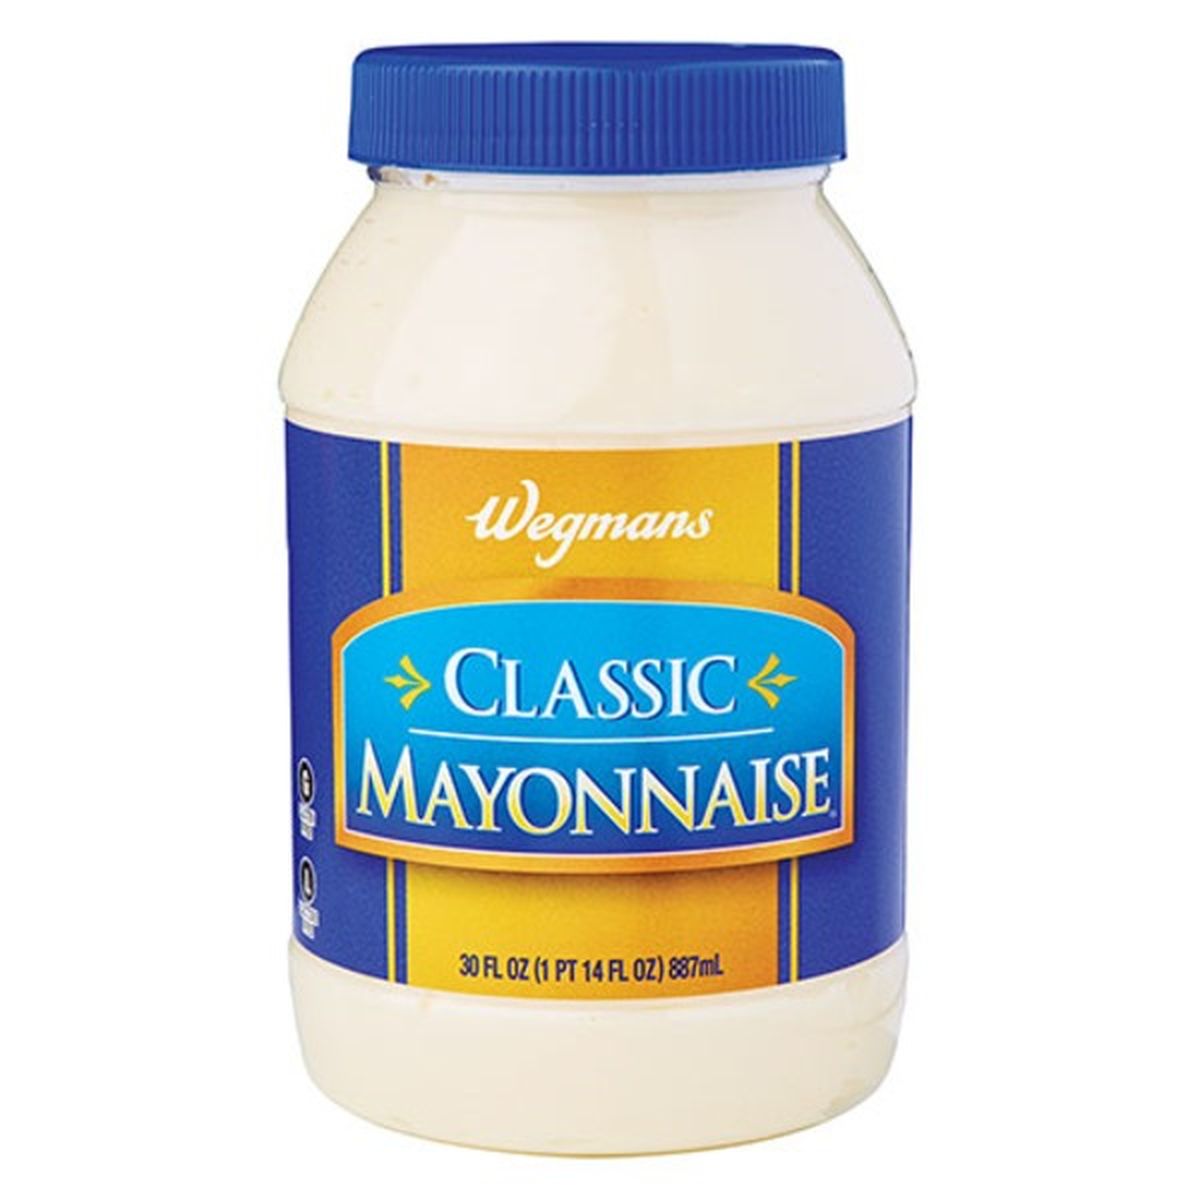 Calories in Wegmans Classic Mayonnaise